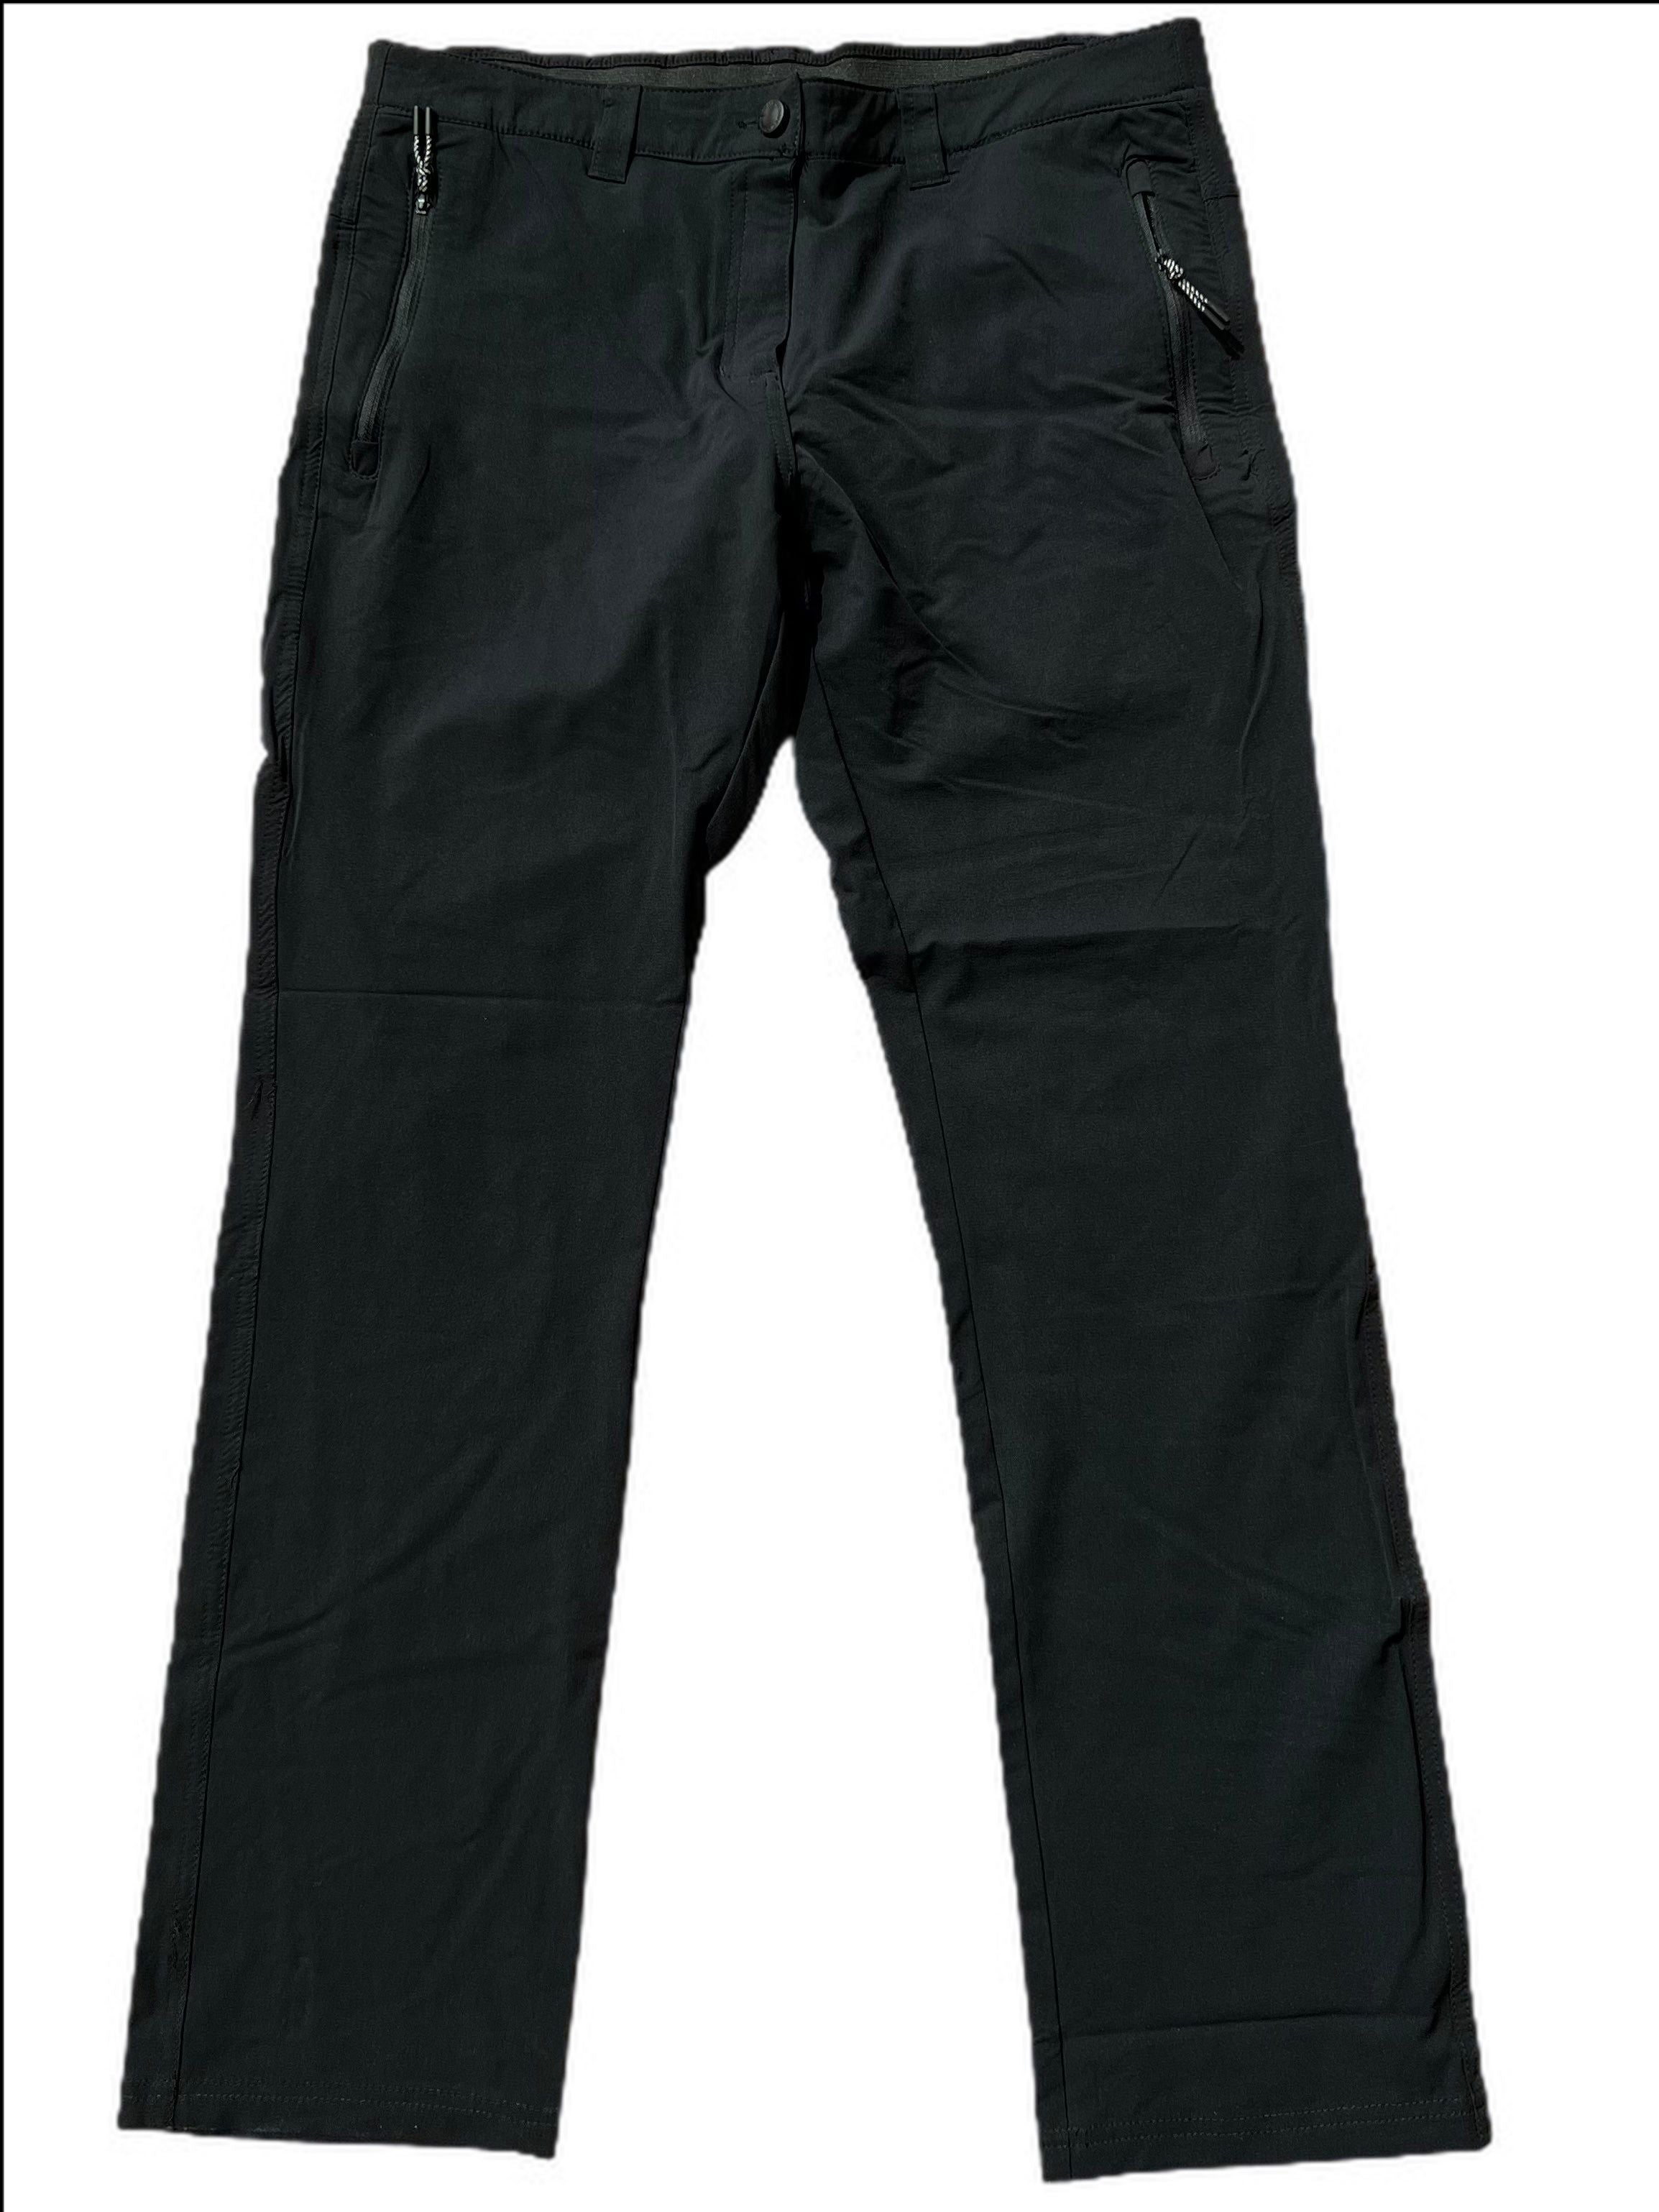 Sports Pants zip Pockets